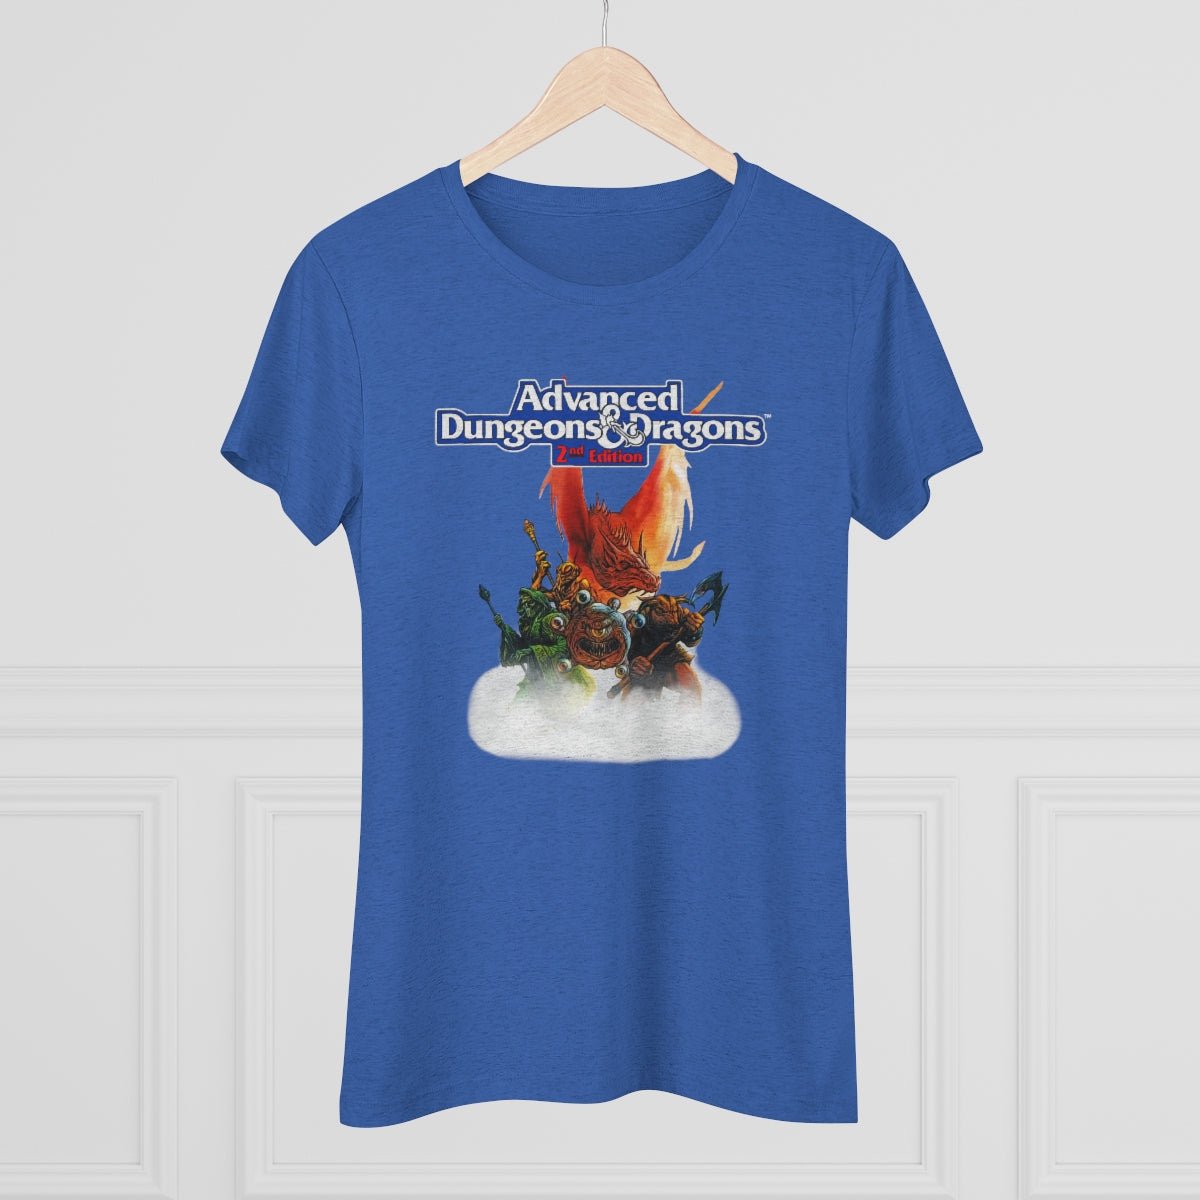 Advanced Dungeons & Dragons themed- Women - BrainStorm Tees - T-Shirt